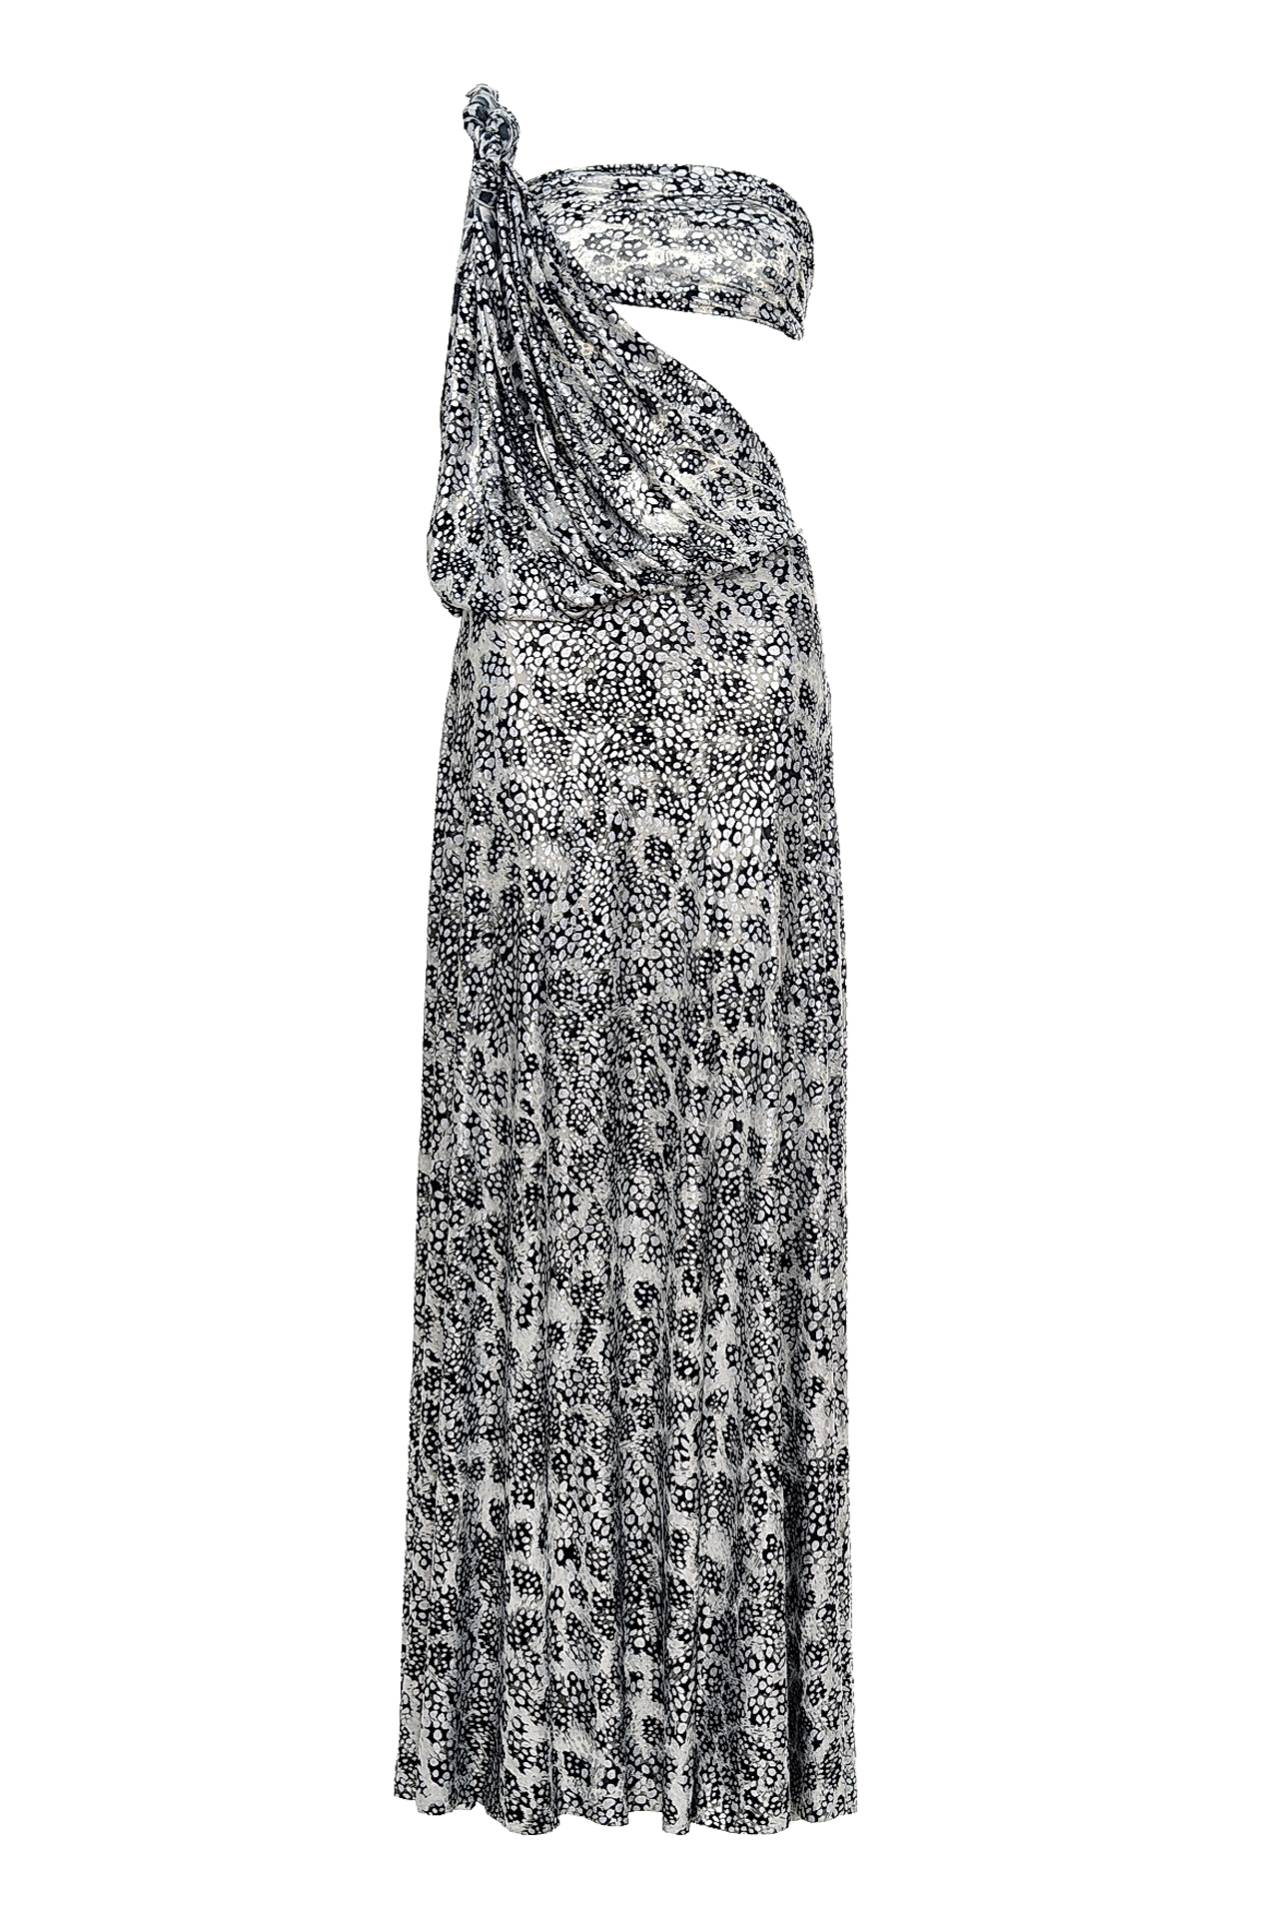 Одежда женская Платье VON VONNI (VVL101PRINT/13.1). Купить за 10430 руб.